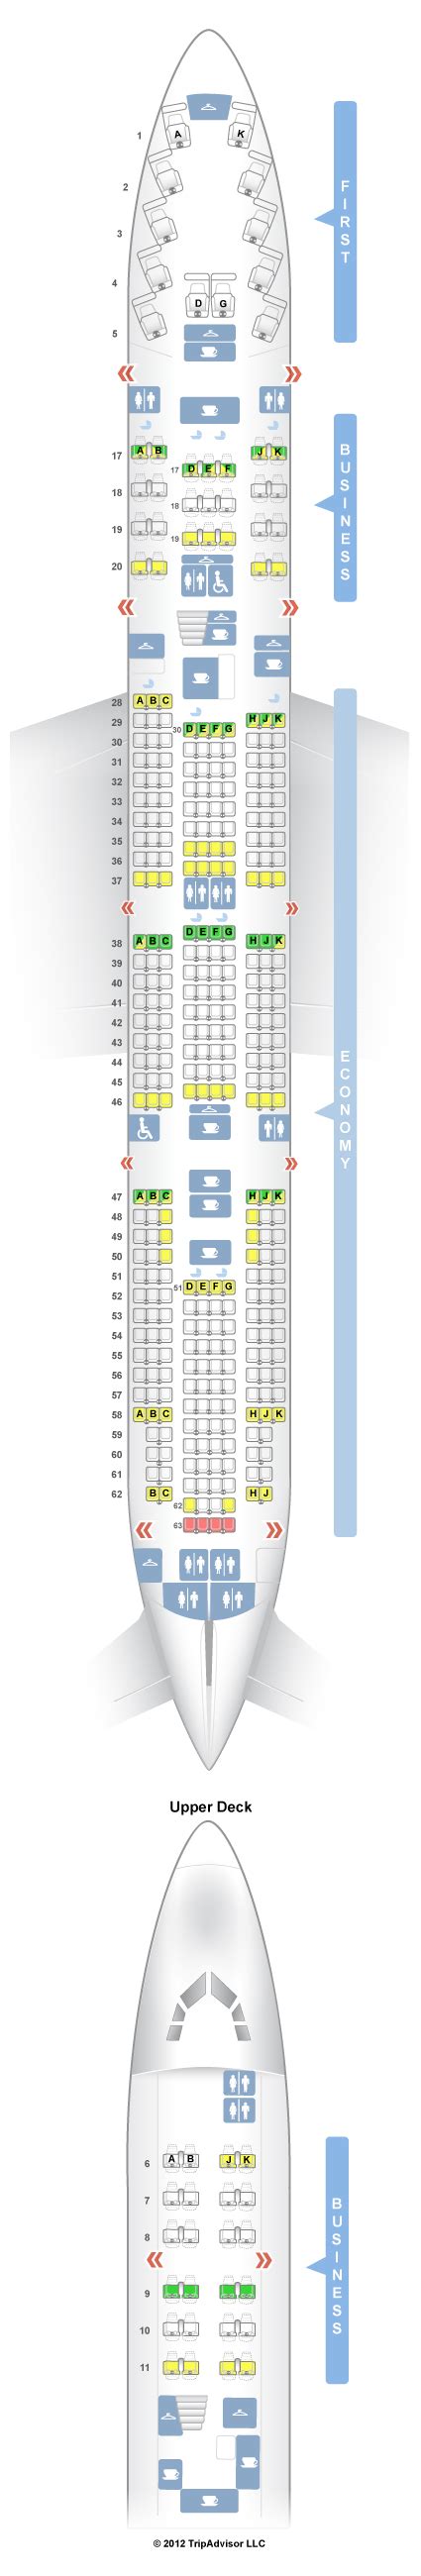 Seatguru Seat Map China Airlines